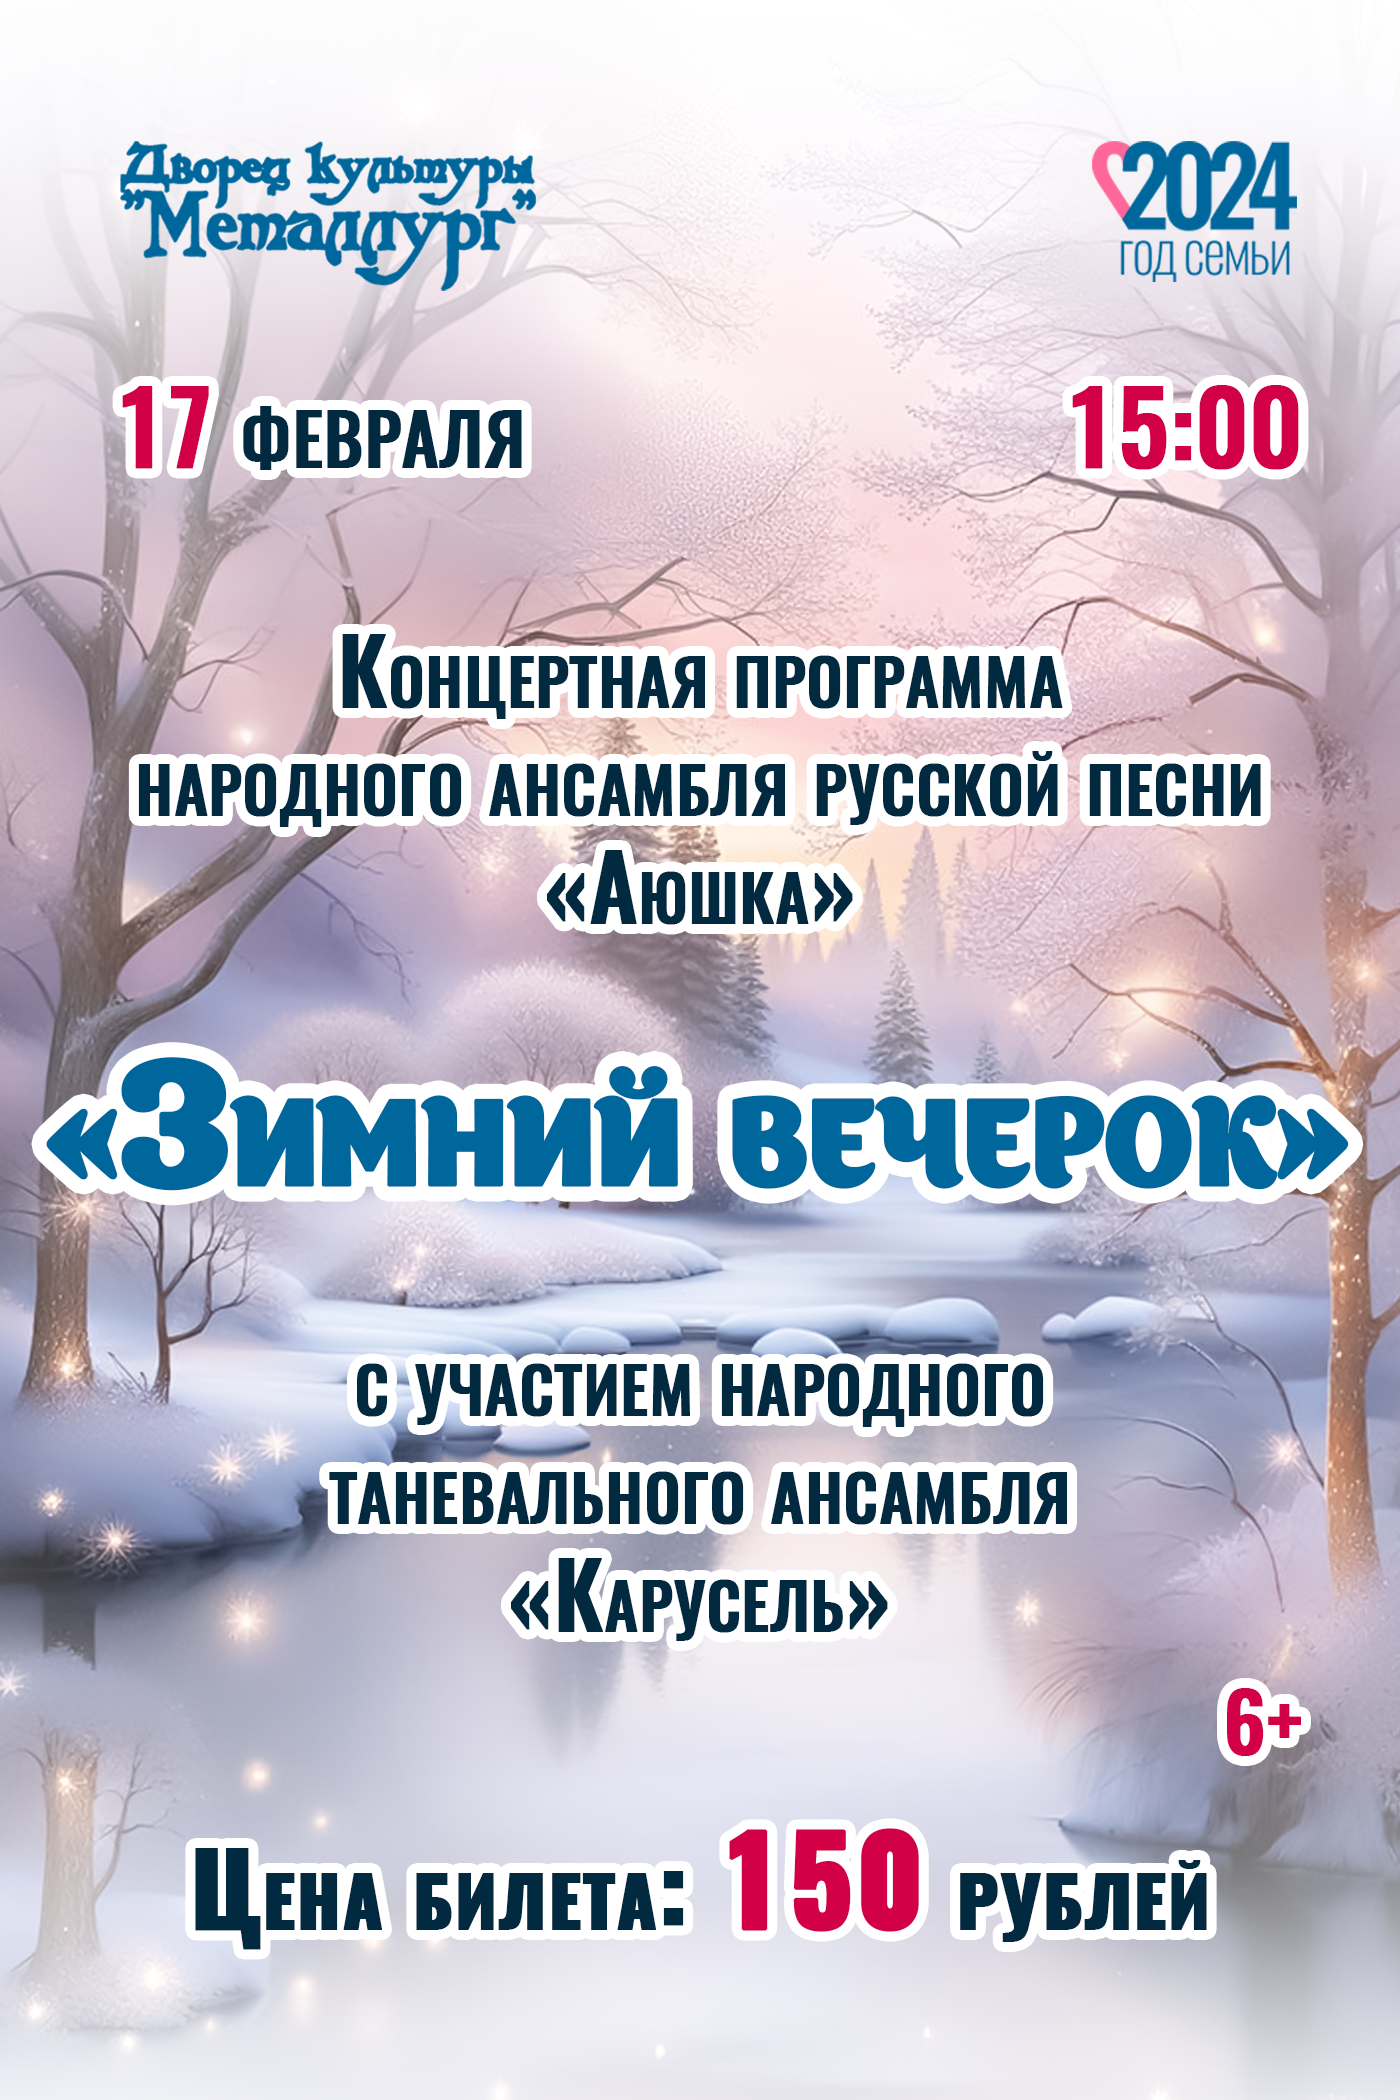 Концертная программа народного ансамбля русской песни «Аюшка» - «Зимний вечерок» (6+).